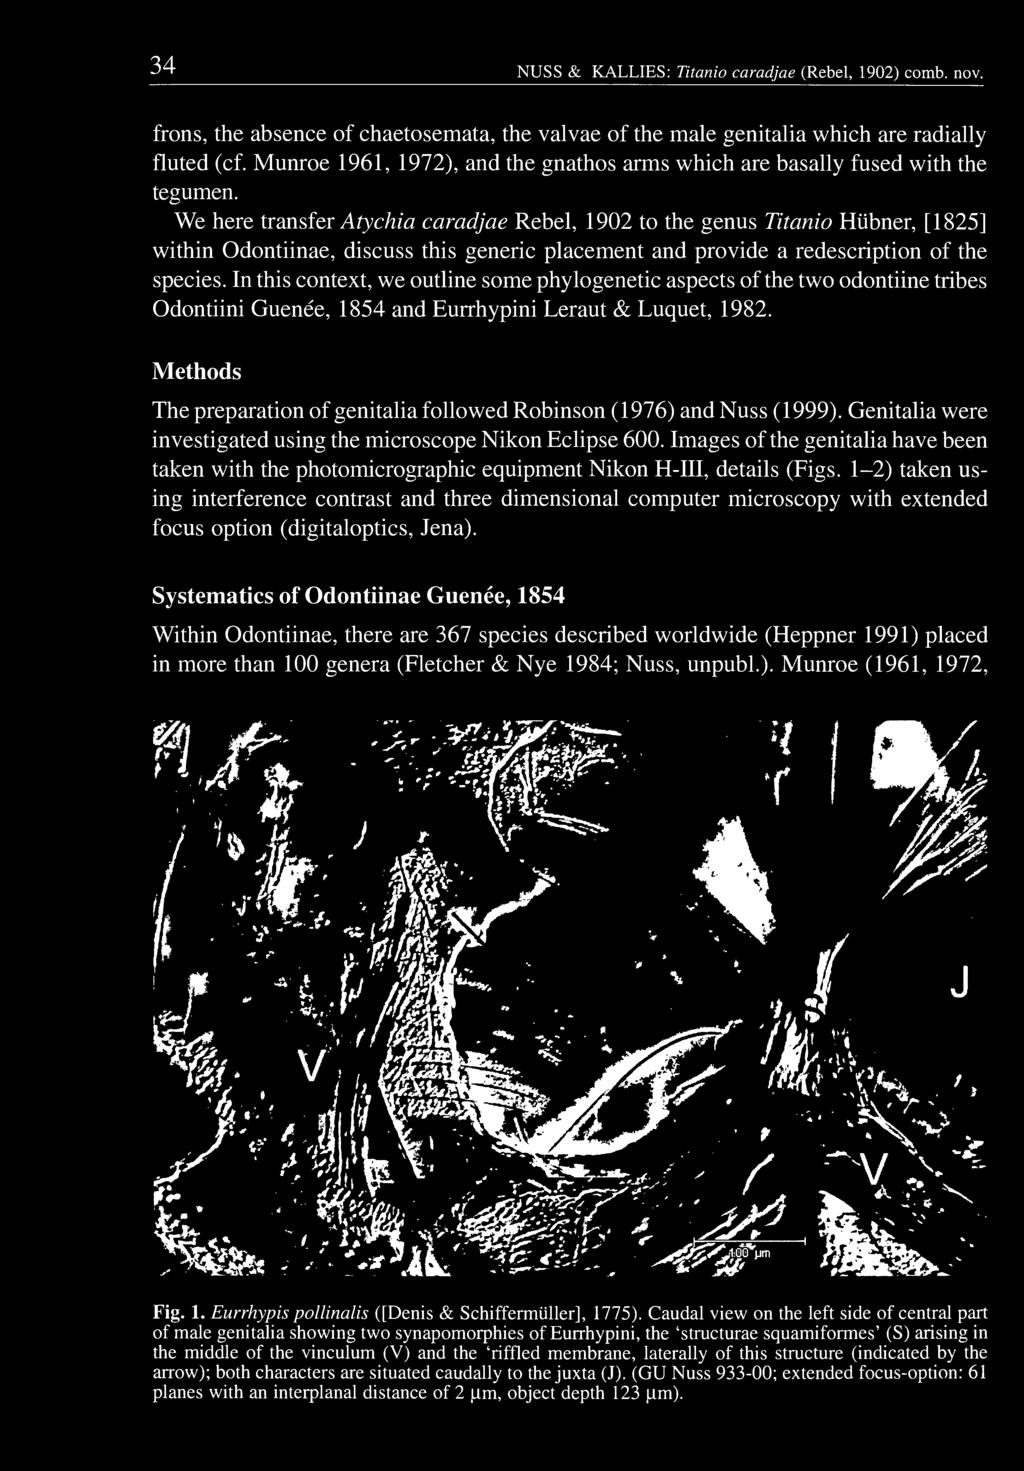 Methods The preparation of genitalia followed Robinson (1976) and Nuss (1999). Genitalia were investigated using the microscope Nikon Eclipse 600.